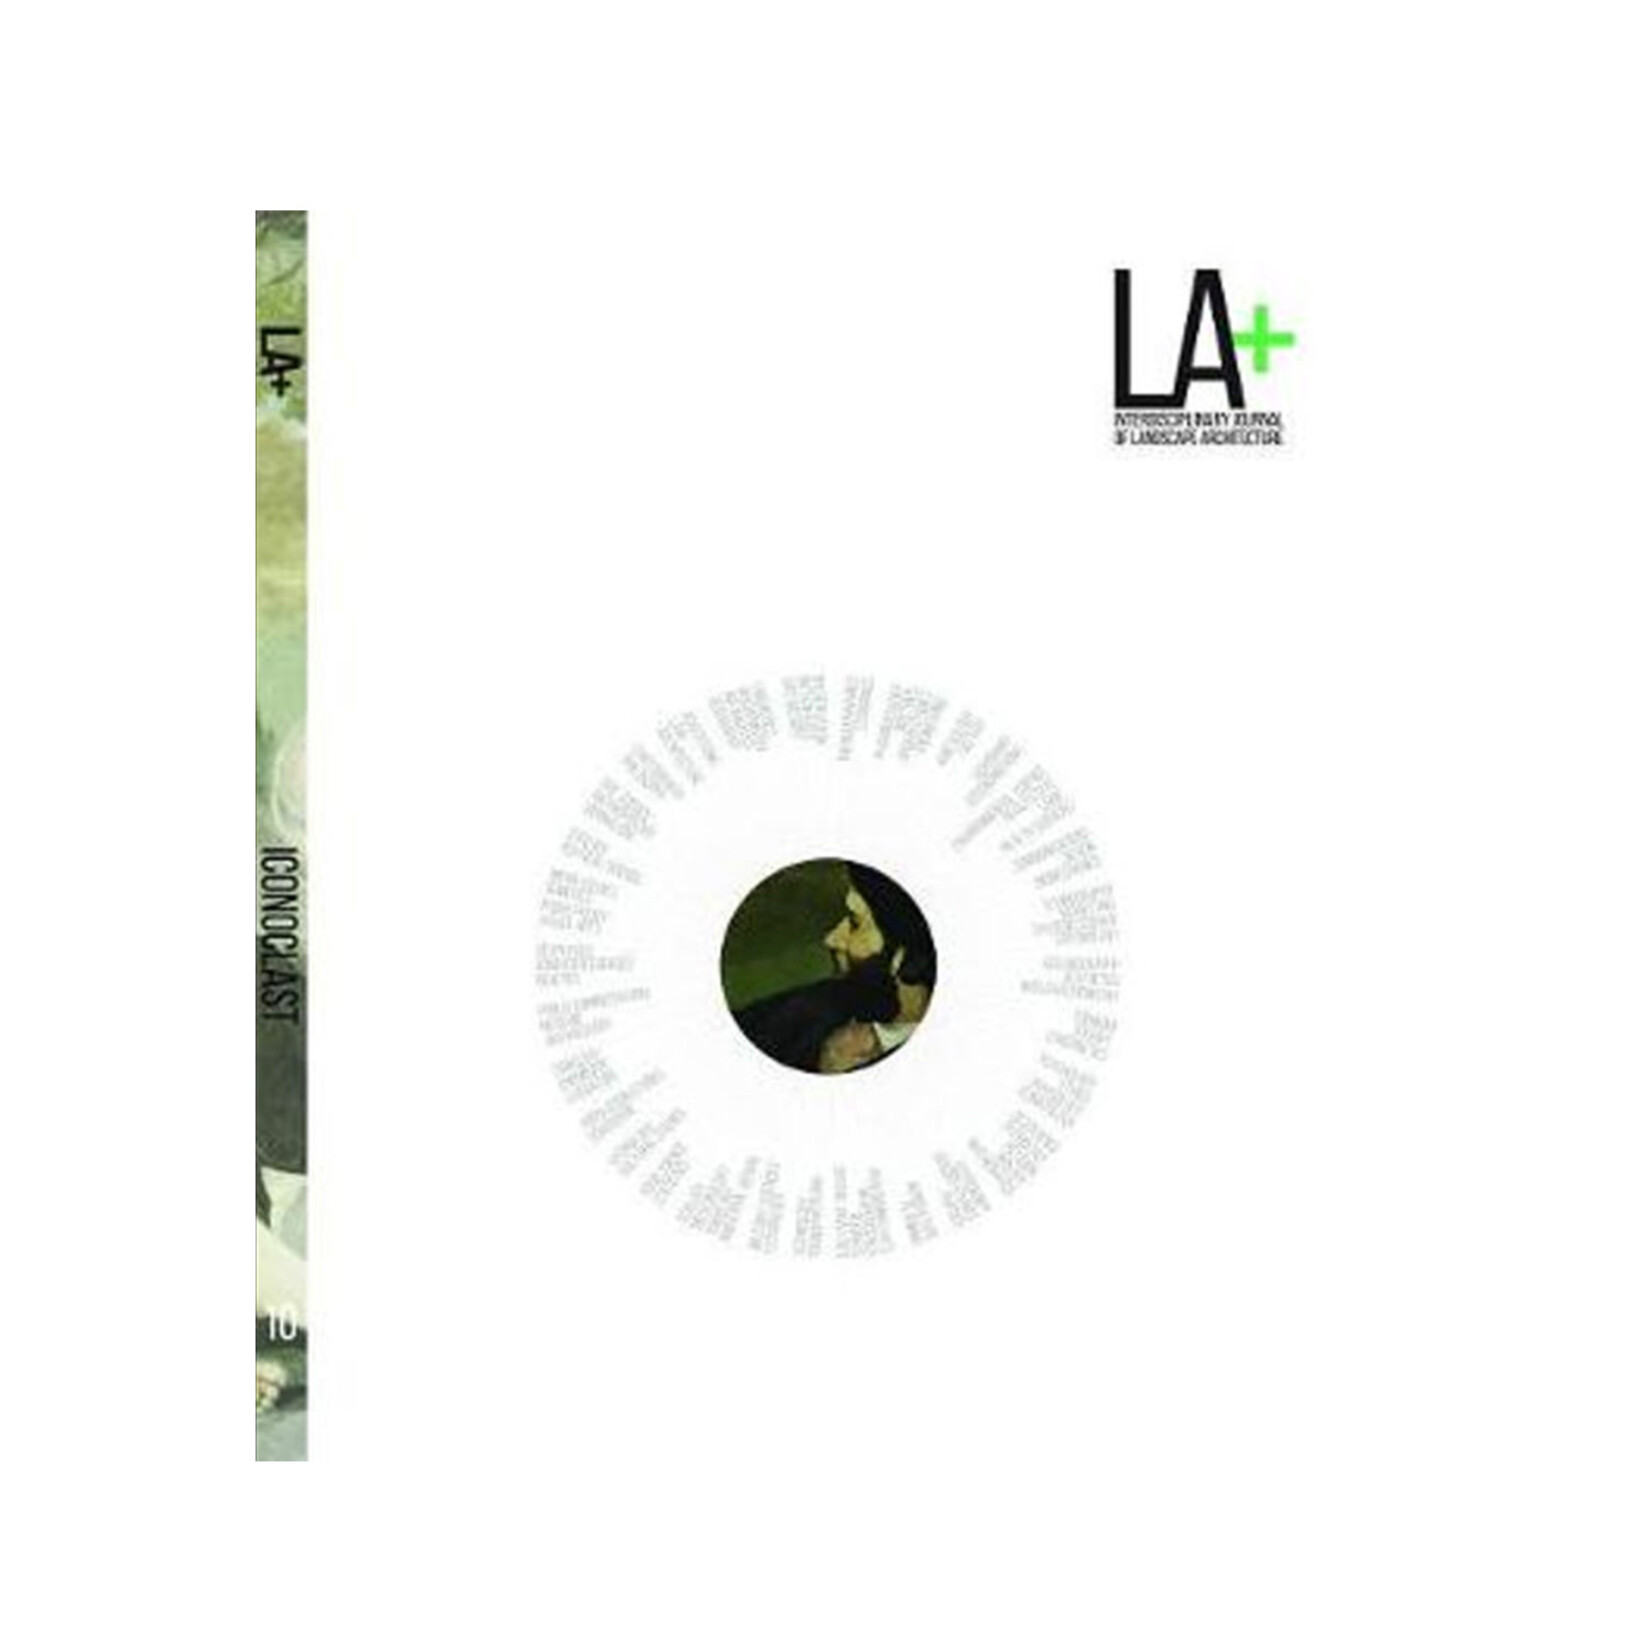 LA+ Journal of Landscape Architecture 10, Iconoclast